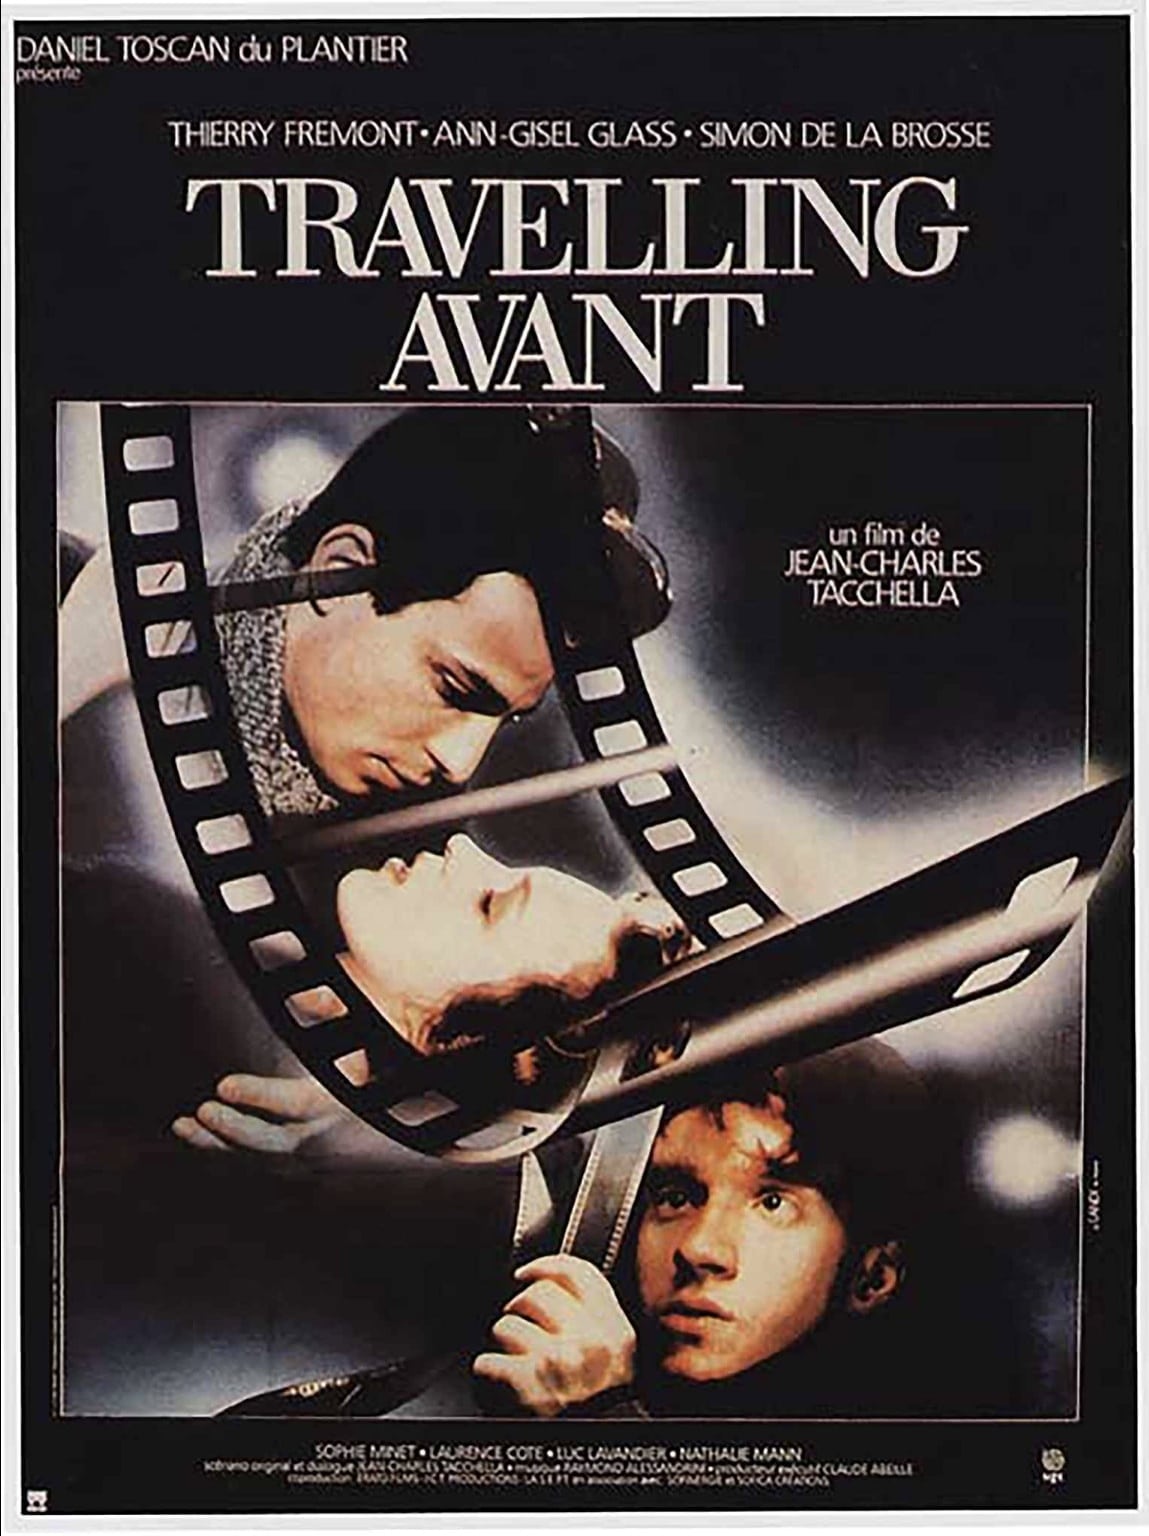 Travelling avant (1987)